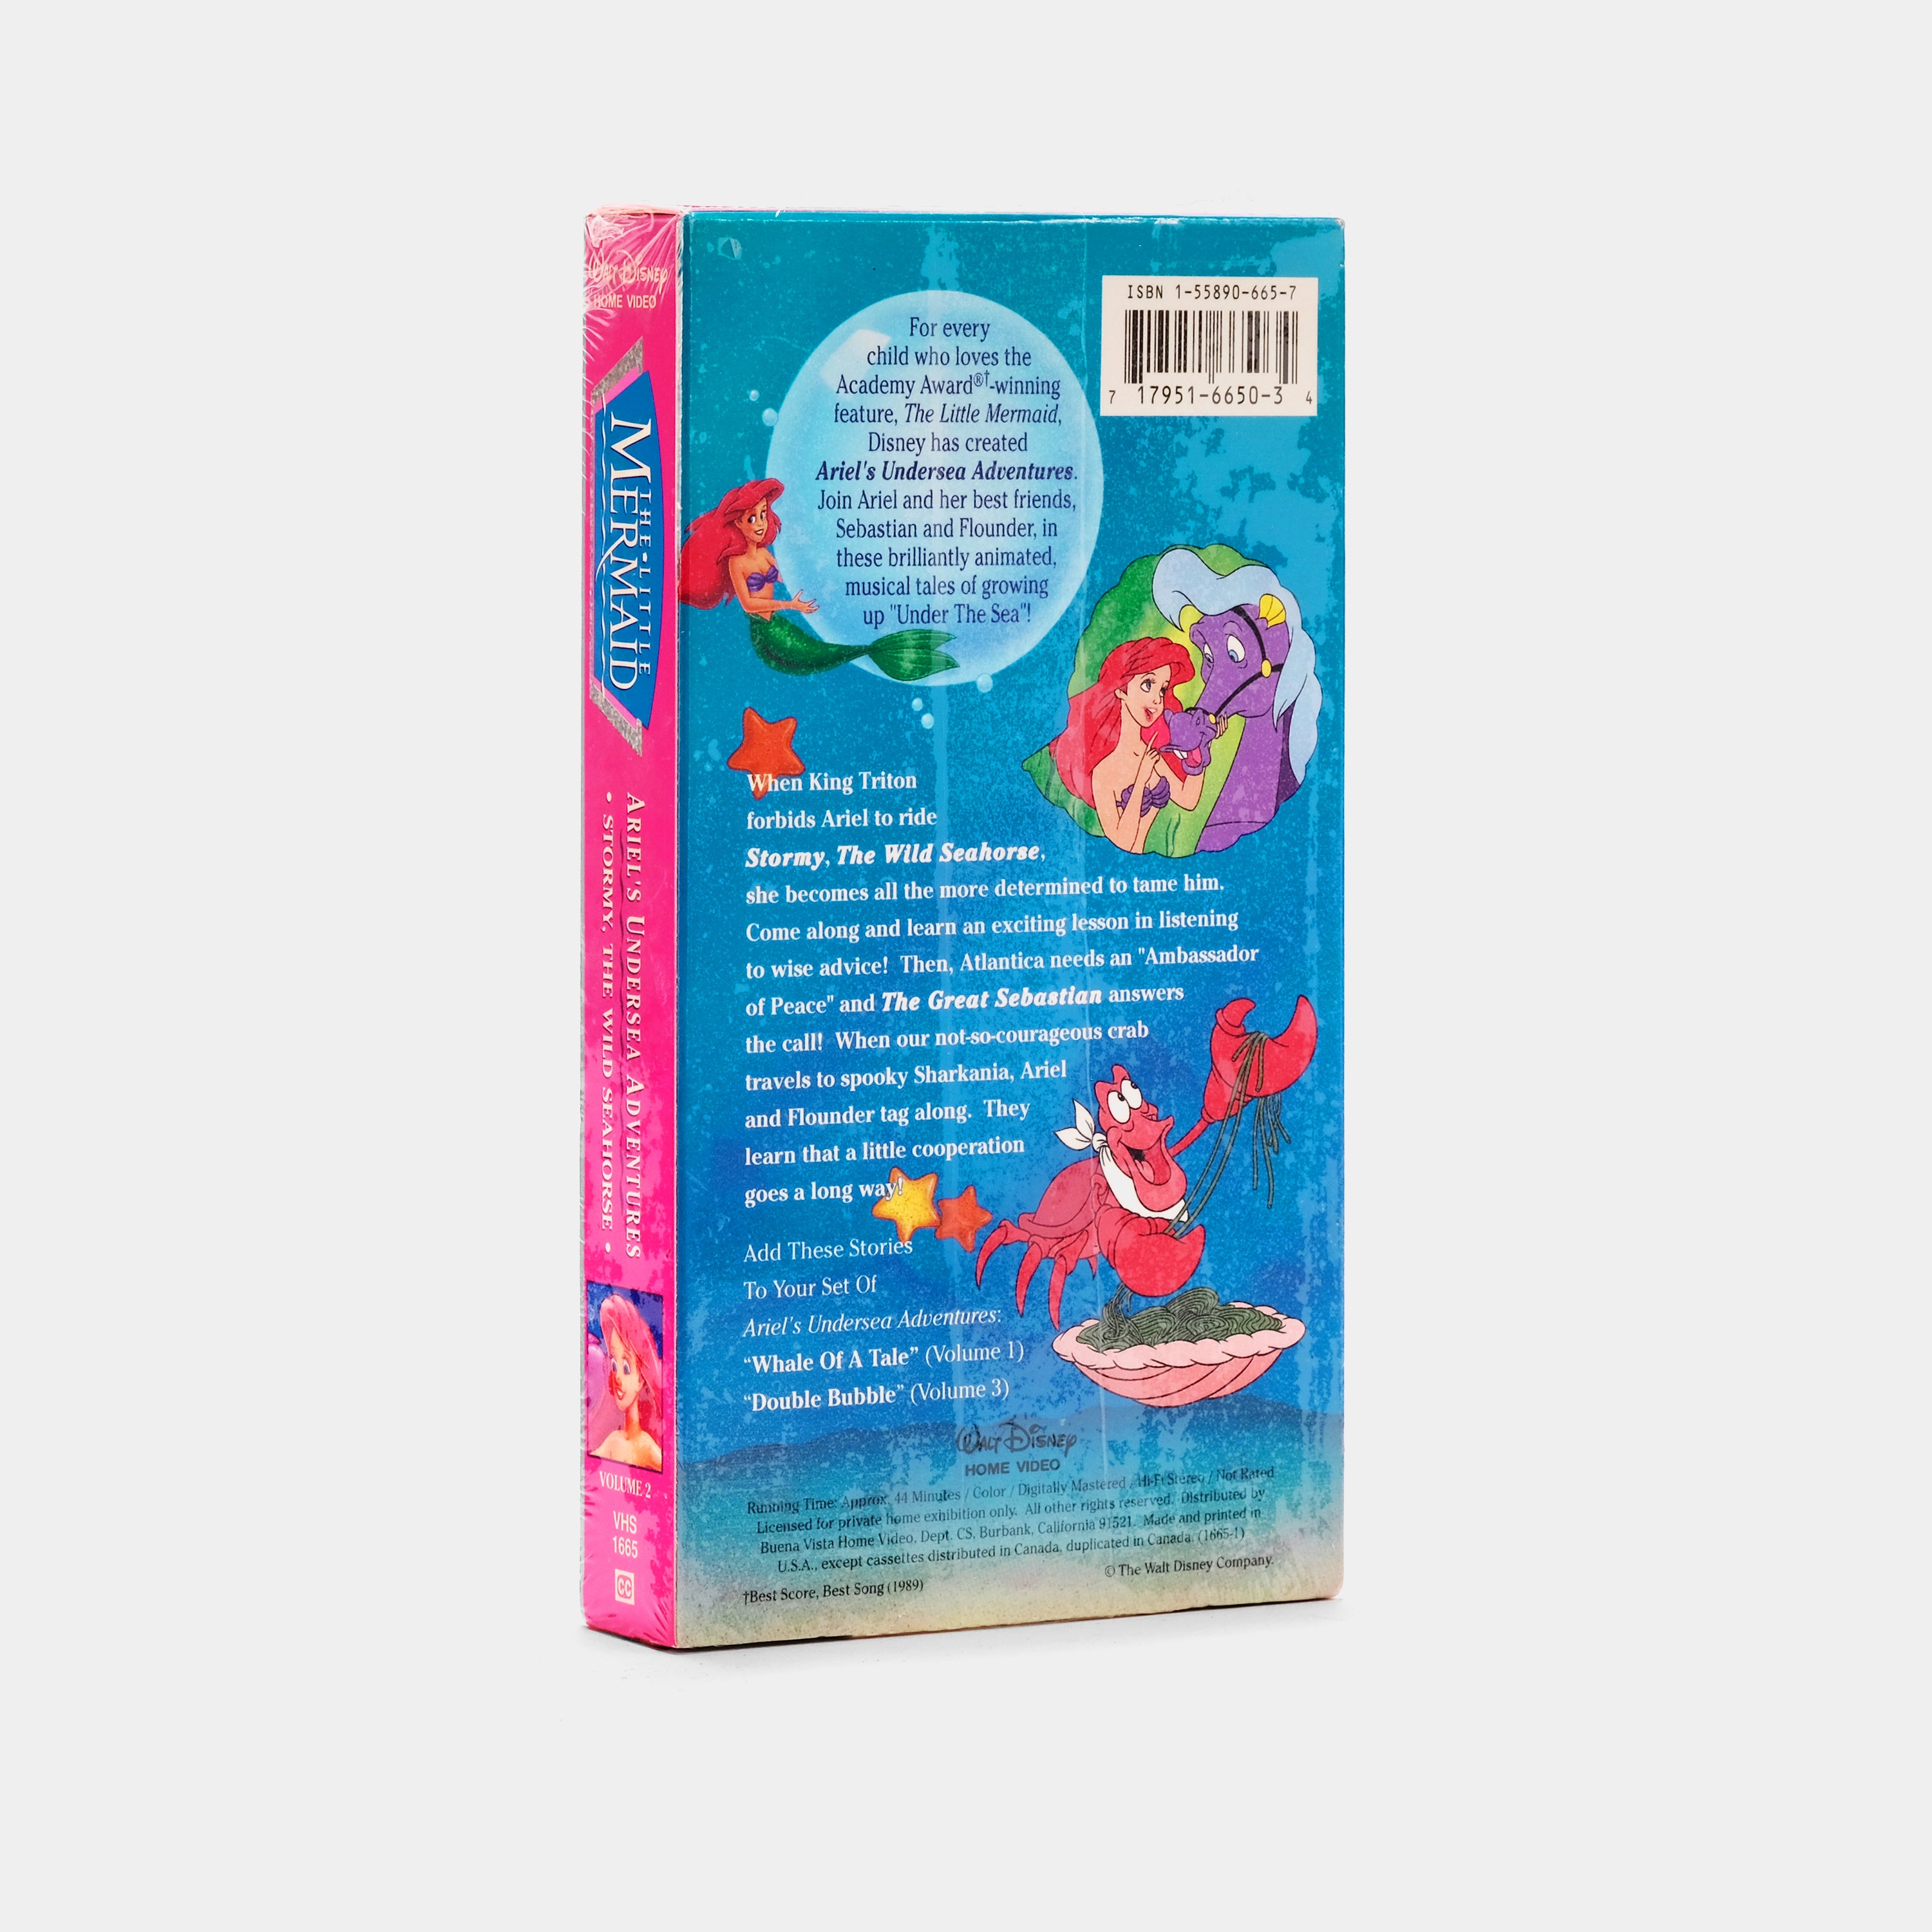 The Little Mermaid: Ariel's Undersea Adventures Vol. 2 (Sealed) VHS Tape